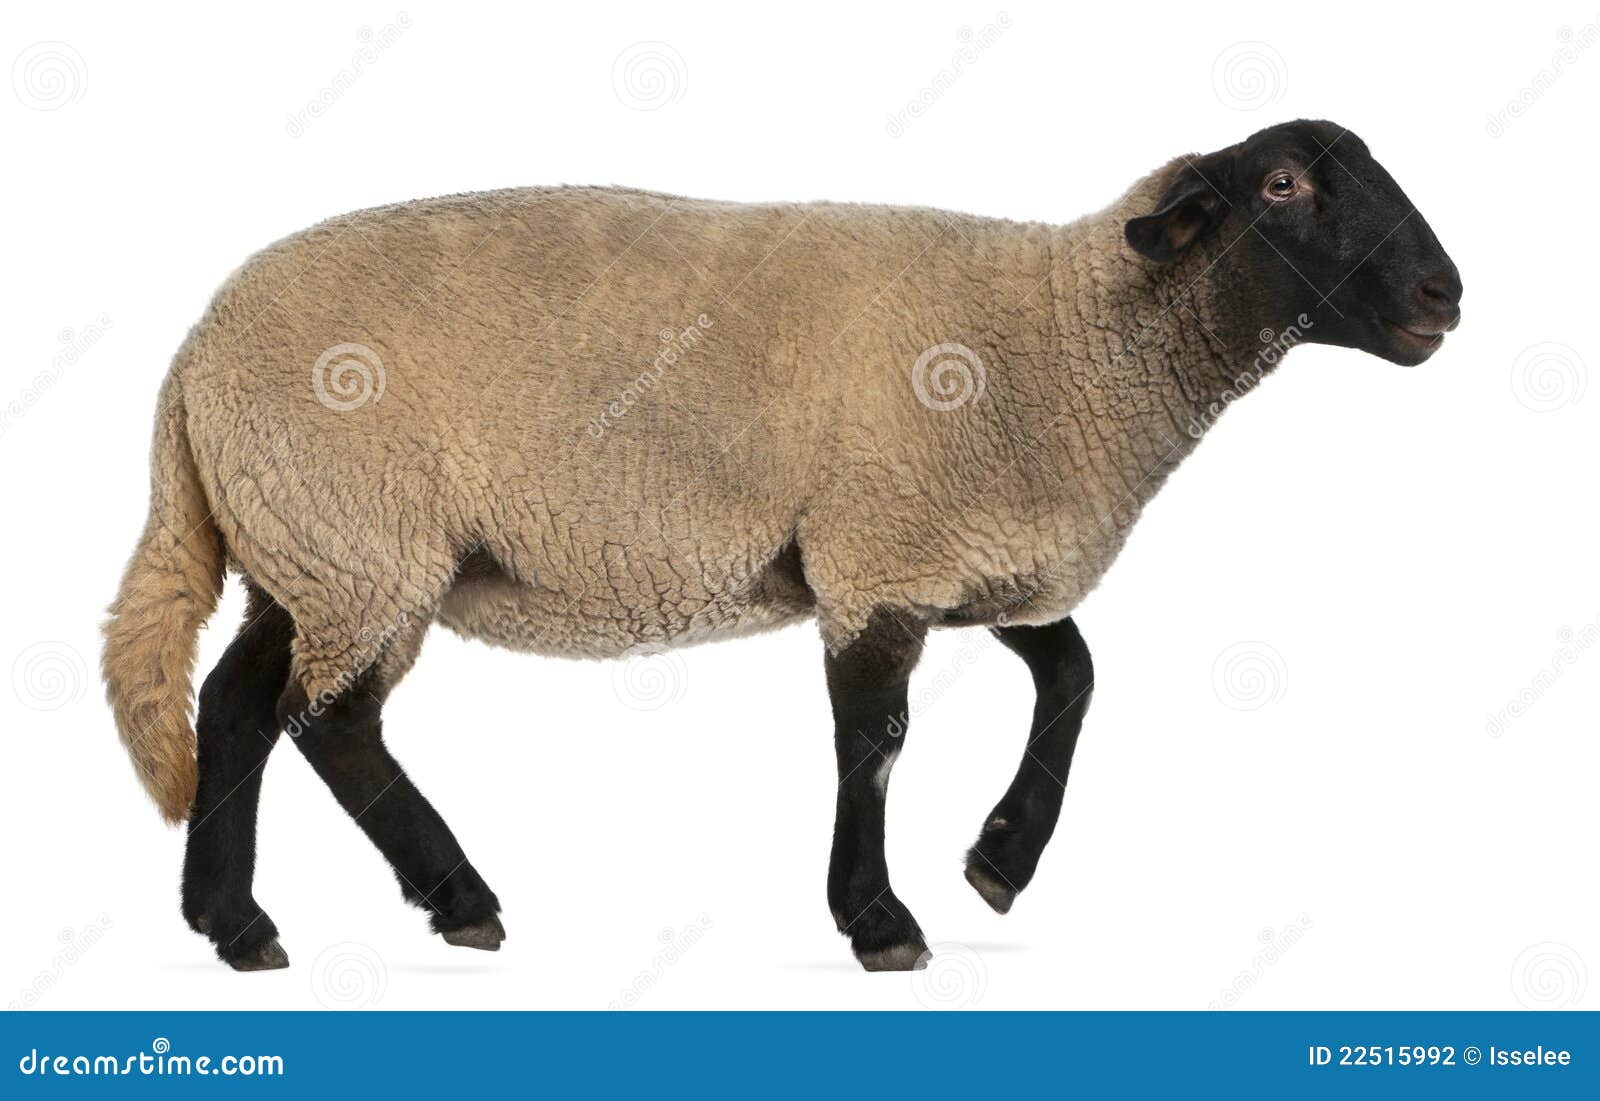 female suffolk sheep, ovis aries, 2 years old